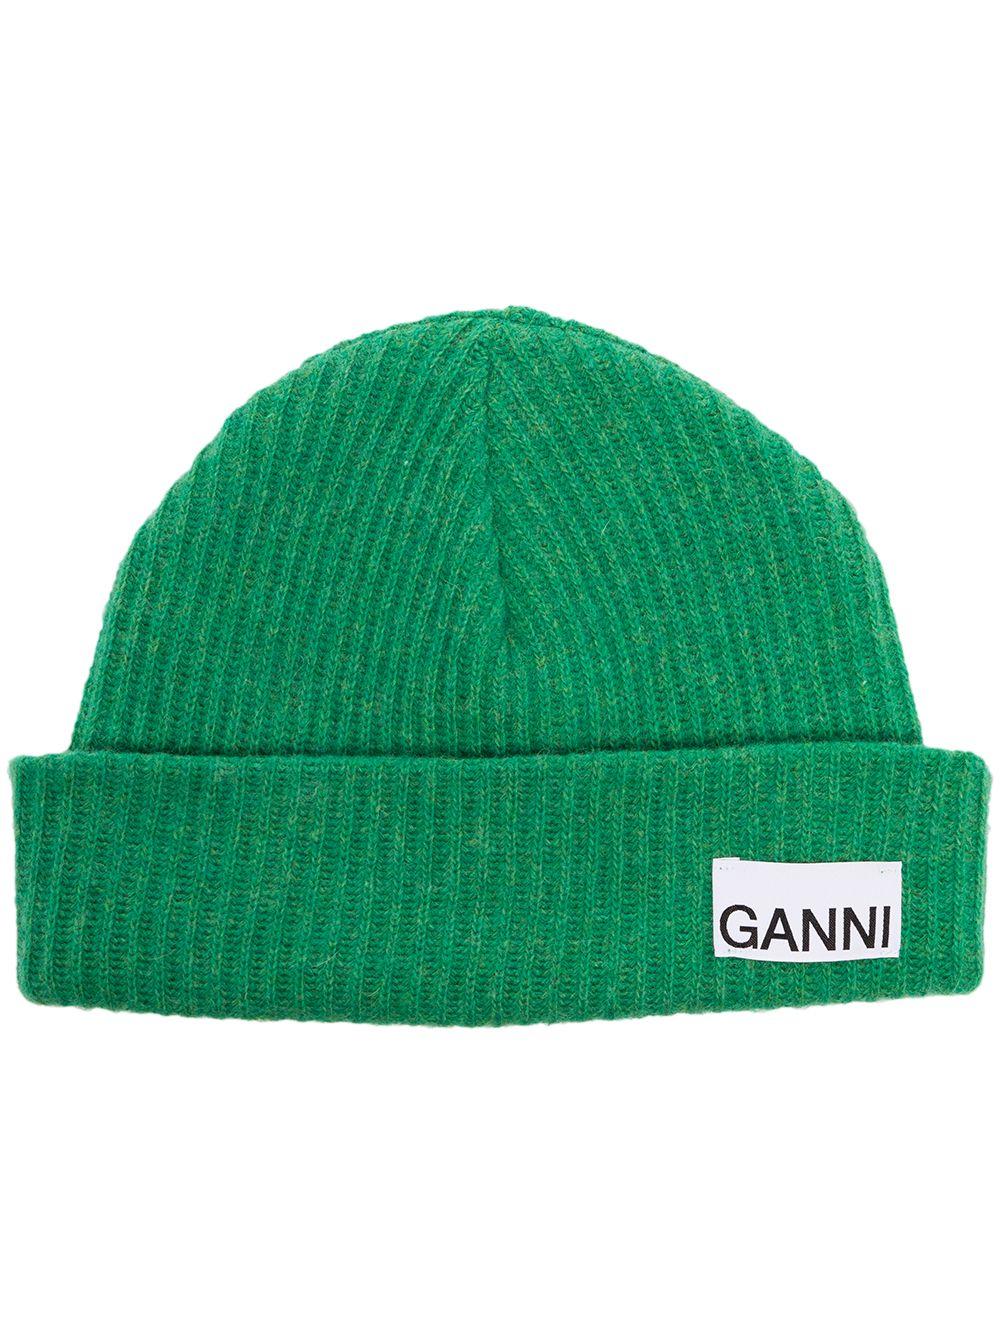 Ganni Ribbed Beanie Hat in Green - Lyst